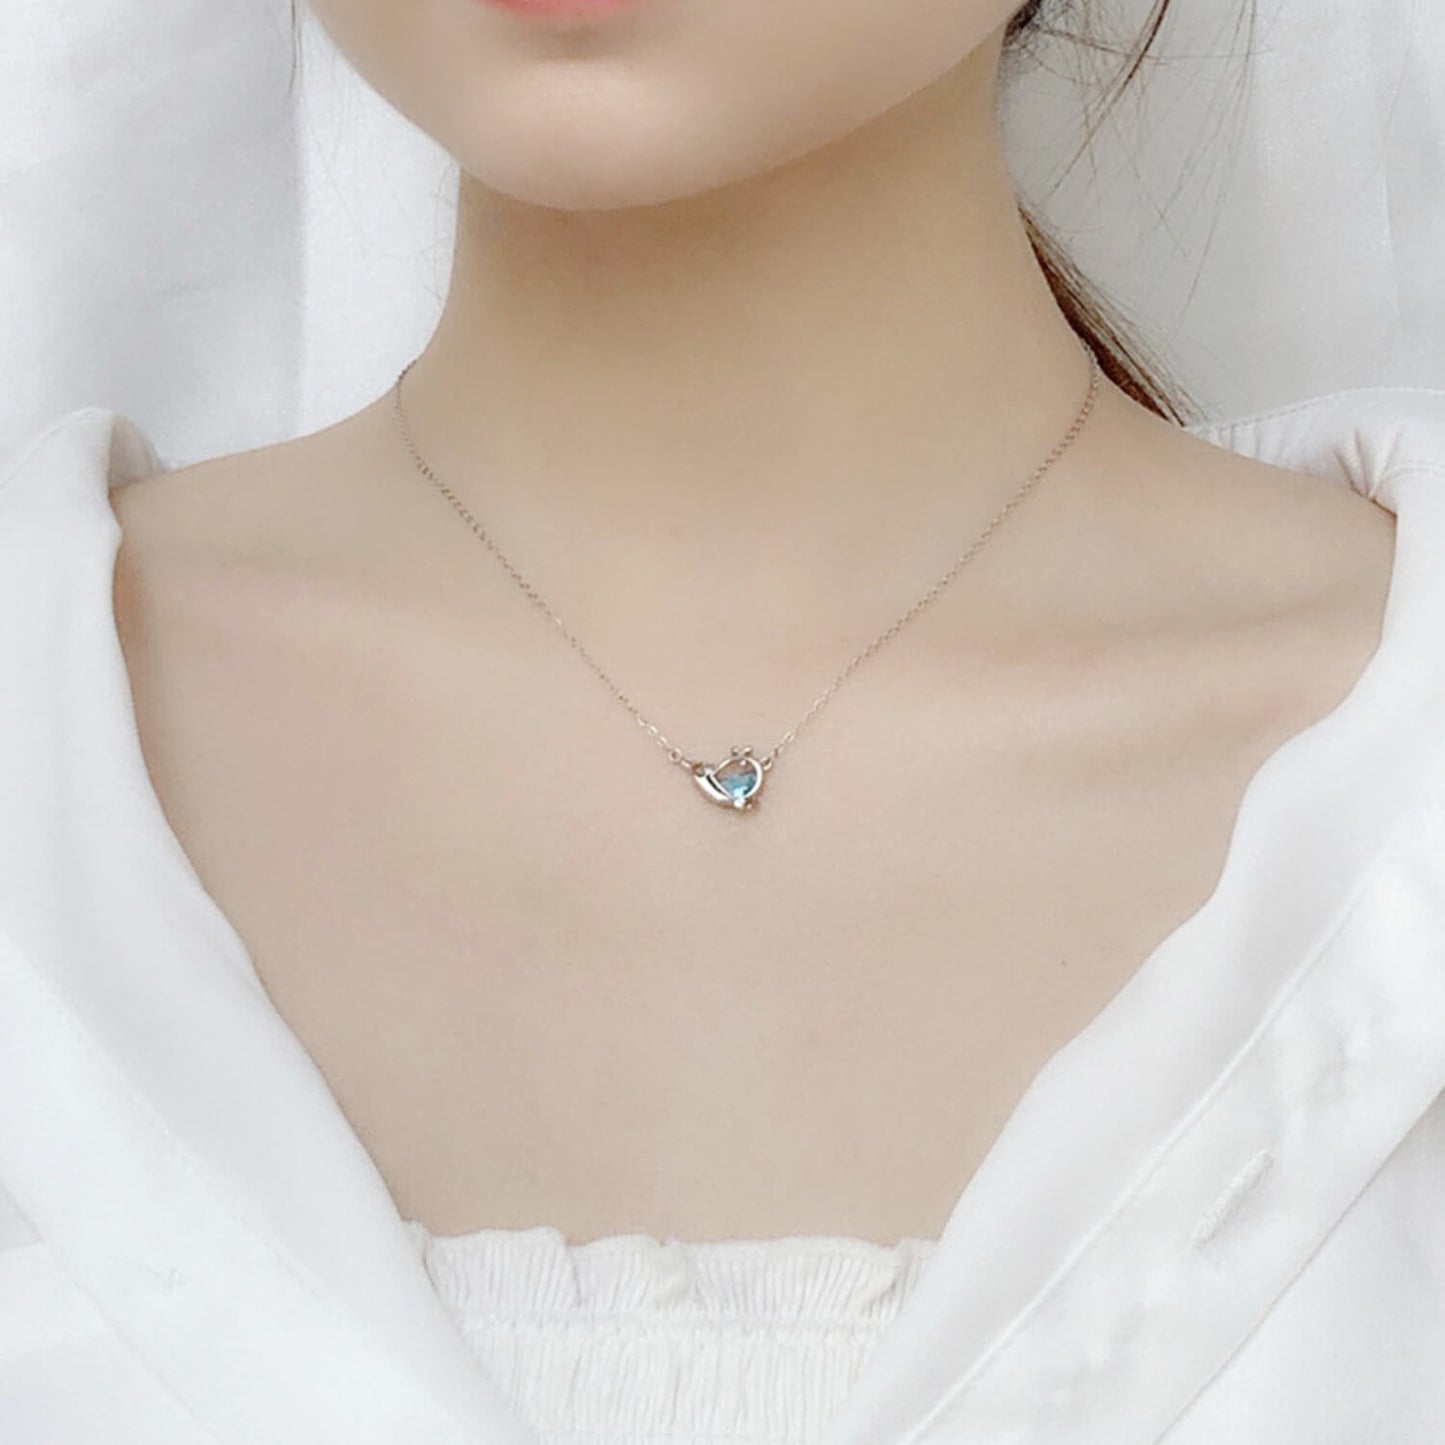 blue whale necklace silver